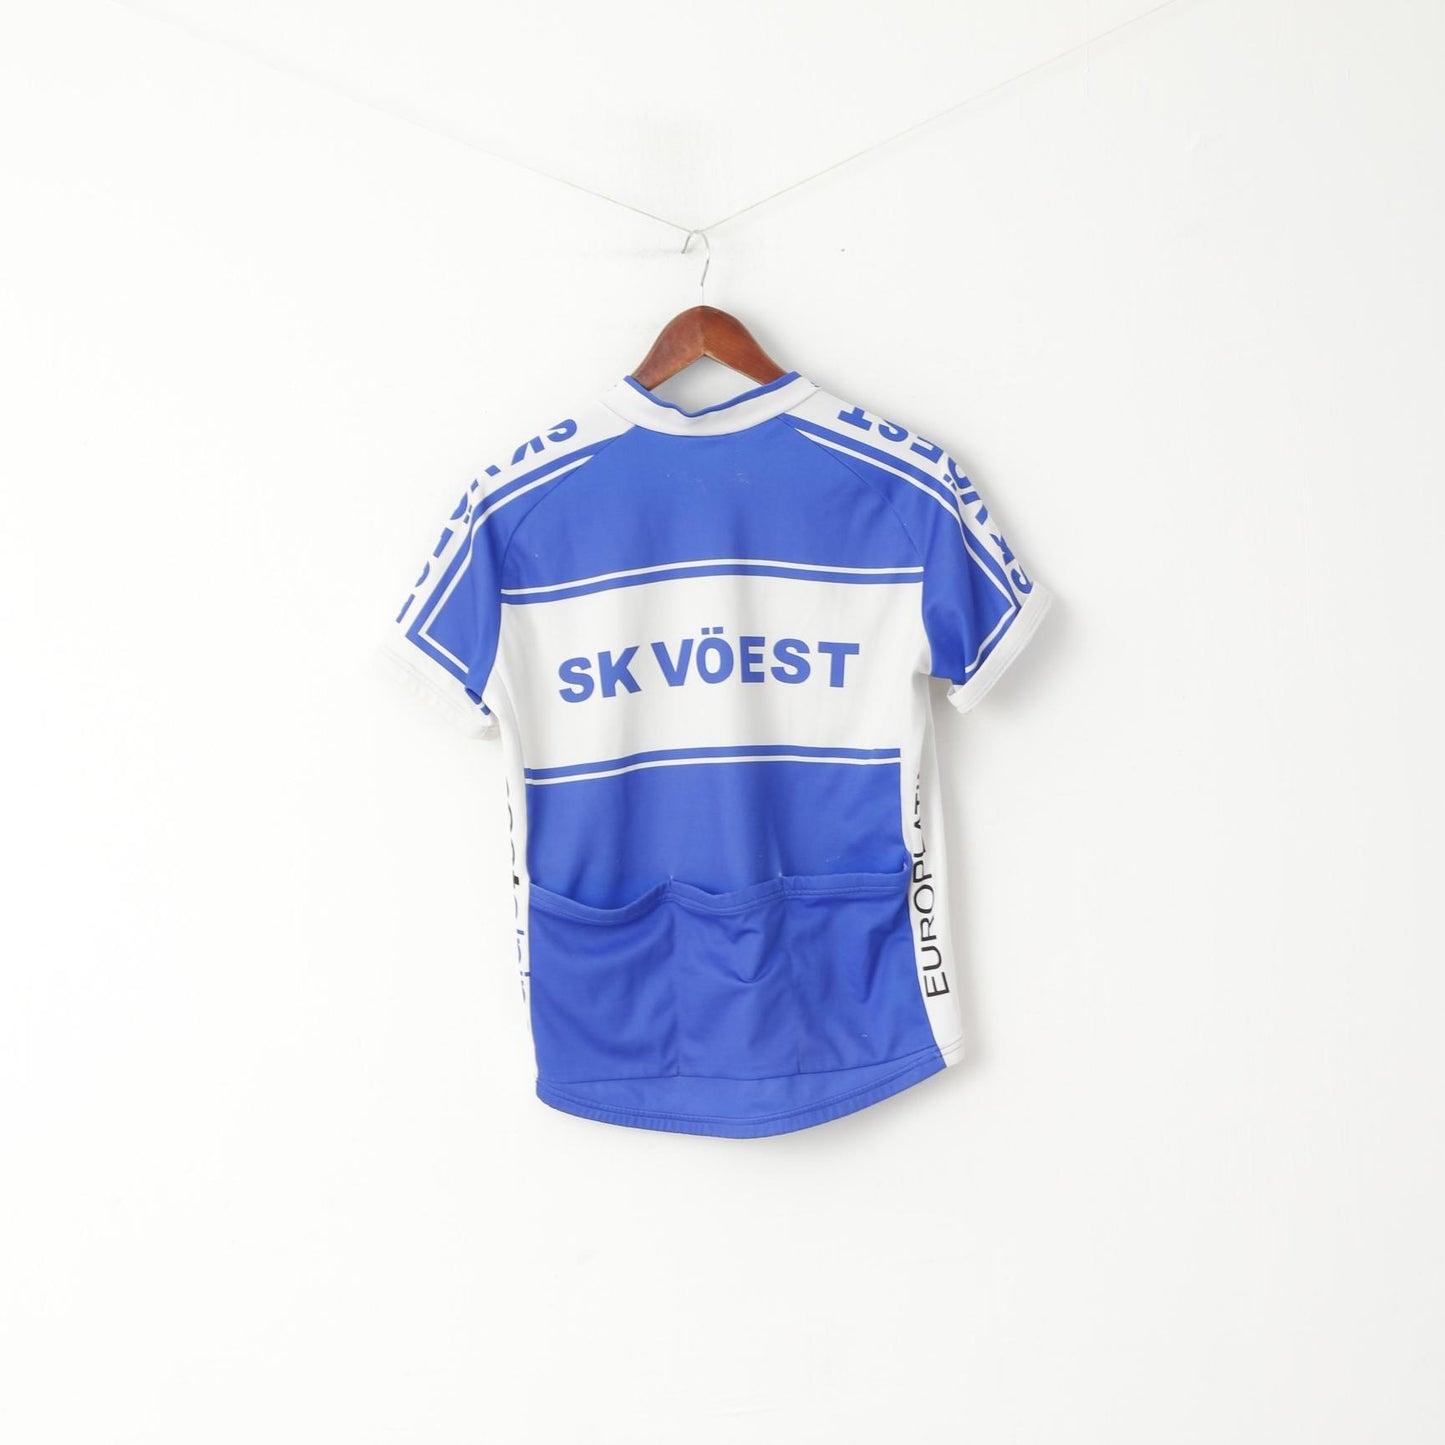 Maglia da ciclismo Sherpa da uomo M blu vintage Hervis Sports SK Voest Retro Bike Top